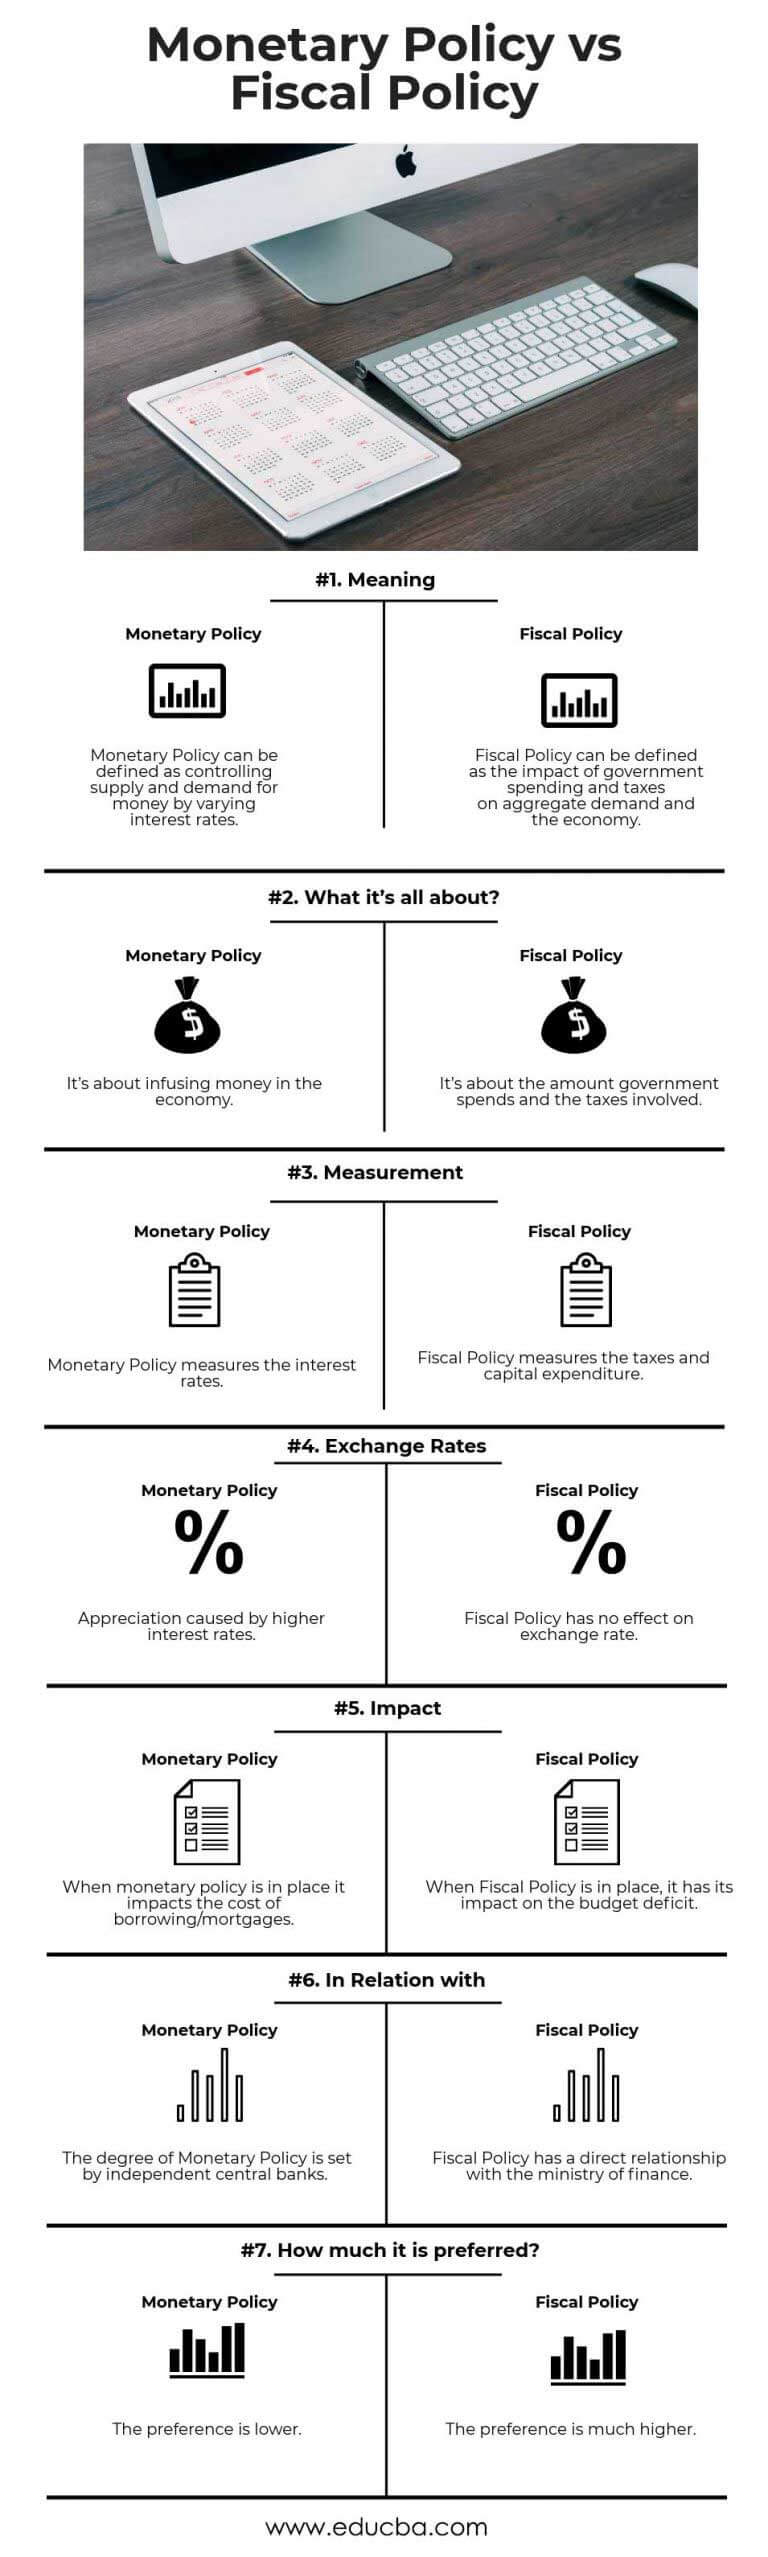 वित्तीय नीति बनाम मौद्रिक नीति (इन्फोग्राफिक्स)